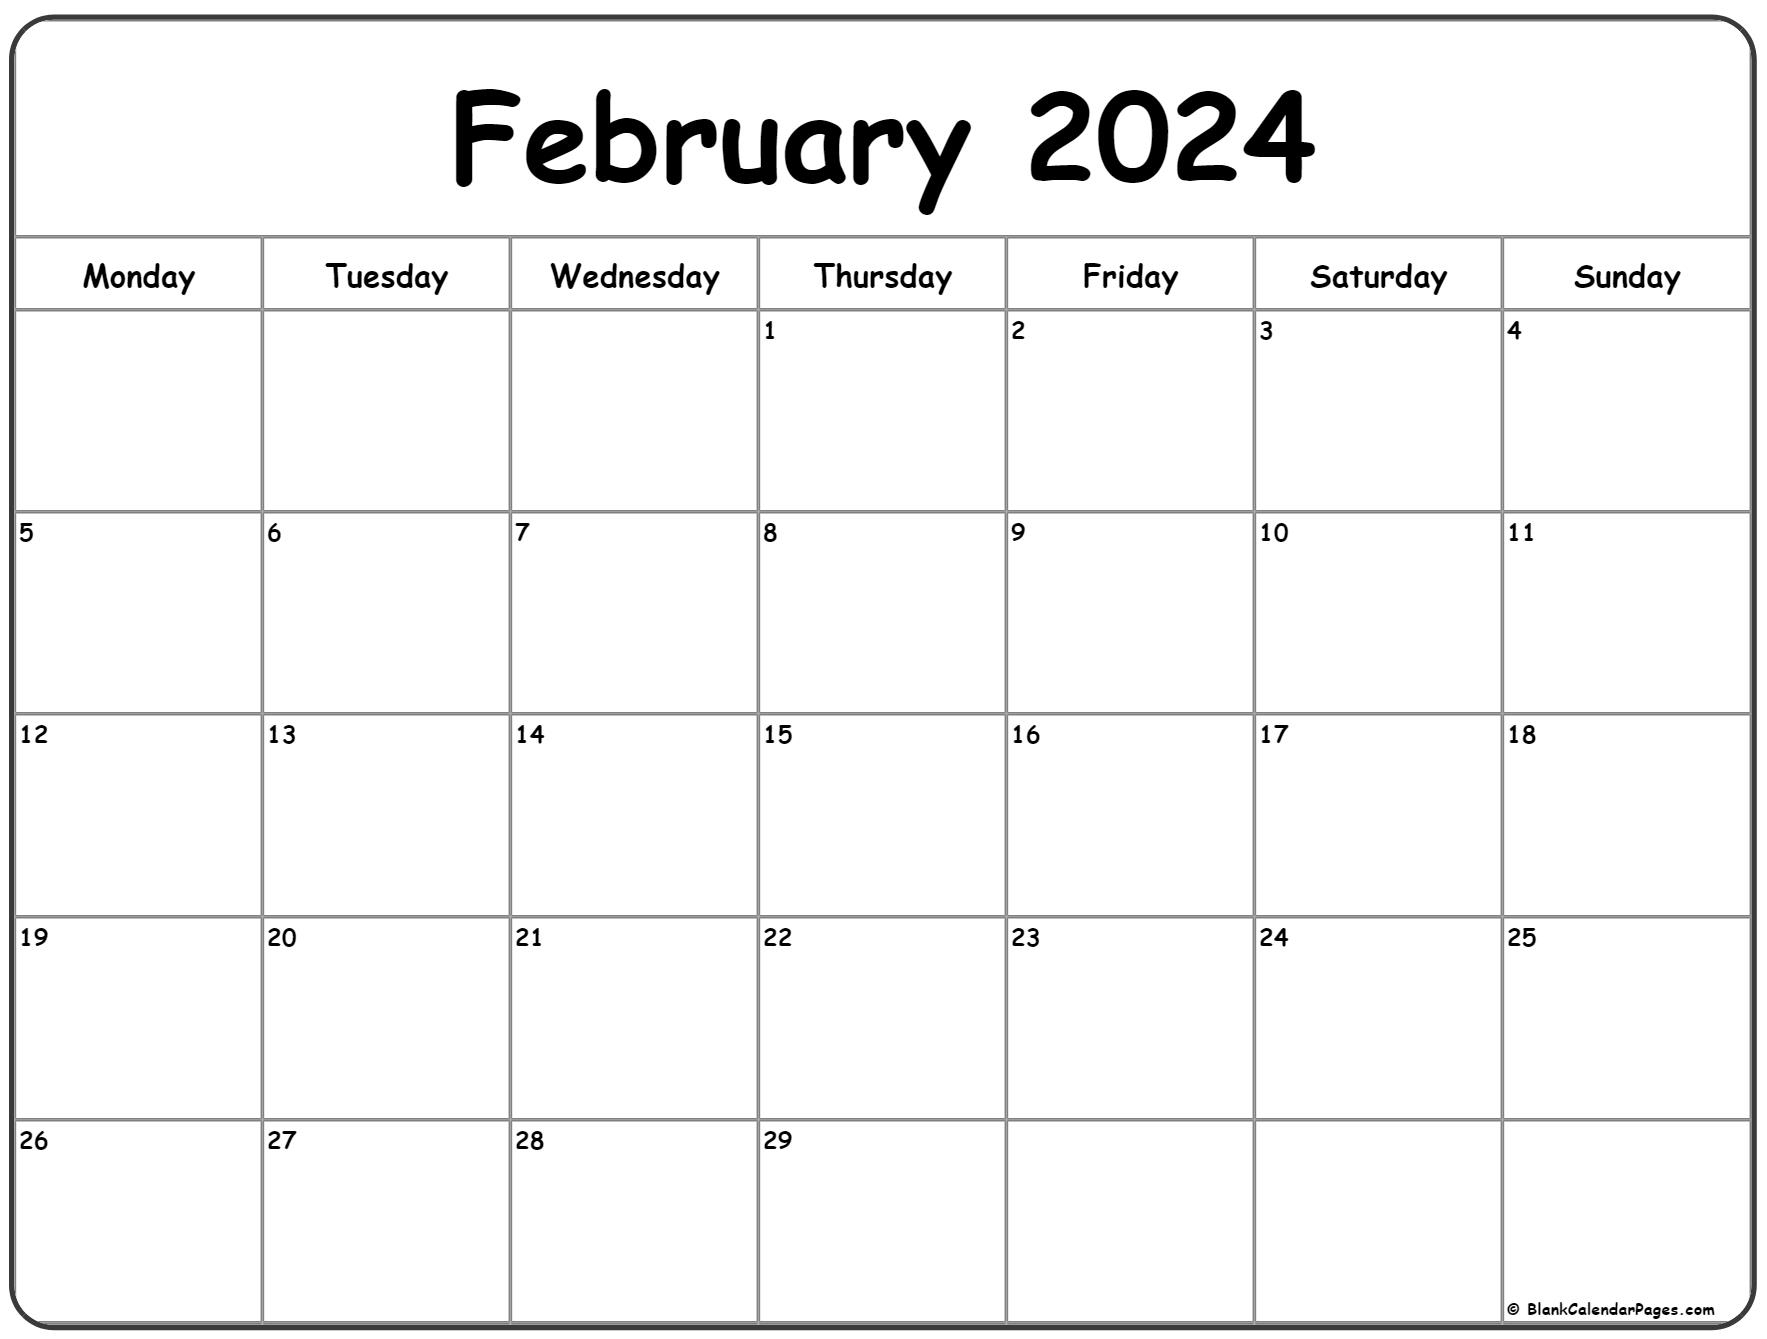 February 2024 Monday Calendar | Monday To Sunday for Printable Free February 2024 Calendar